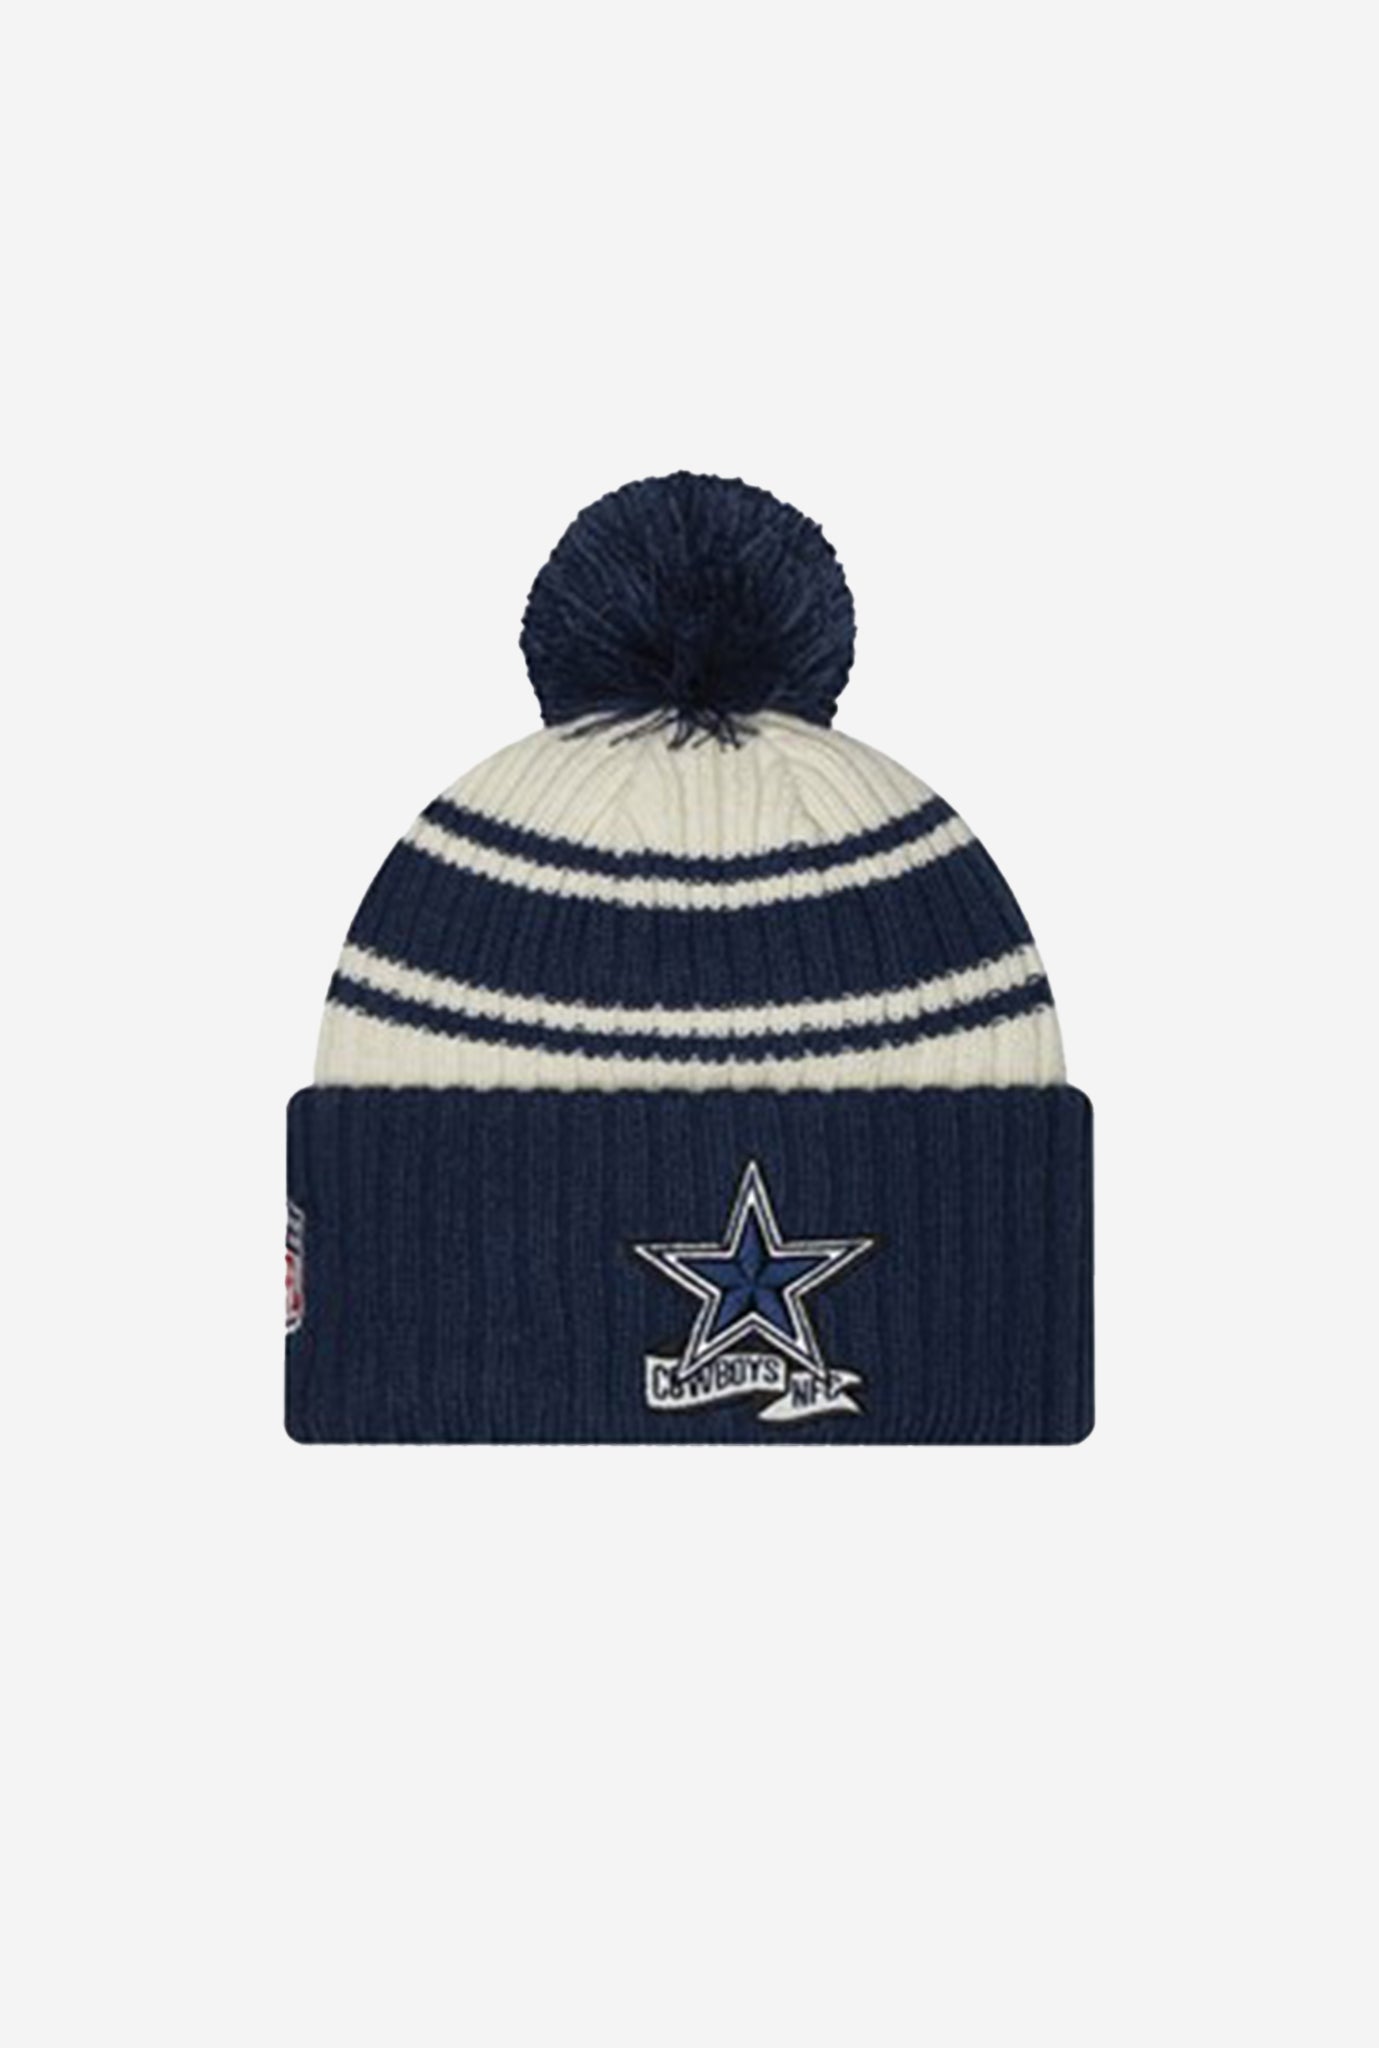 Dallas Cowboys Sideline Sport Knit Beanie